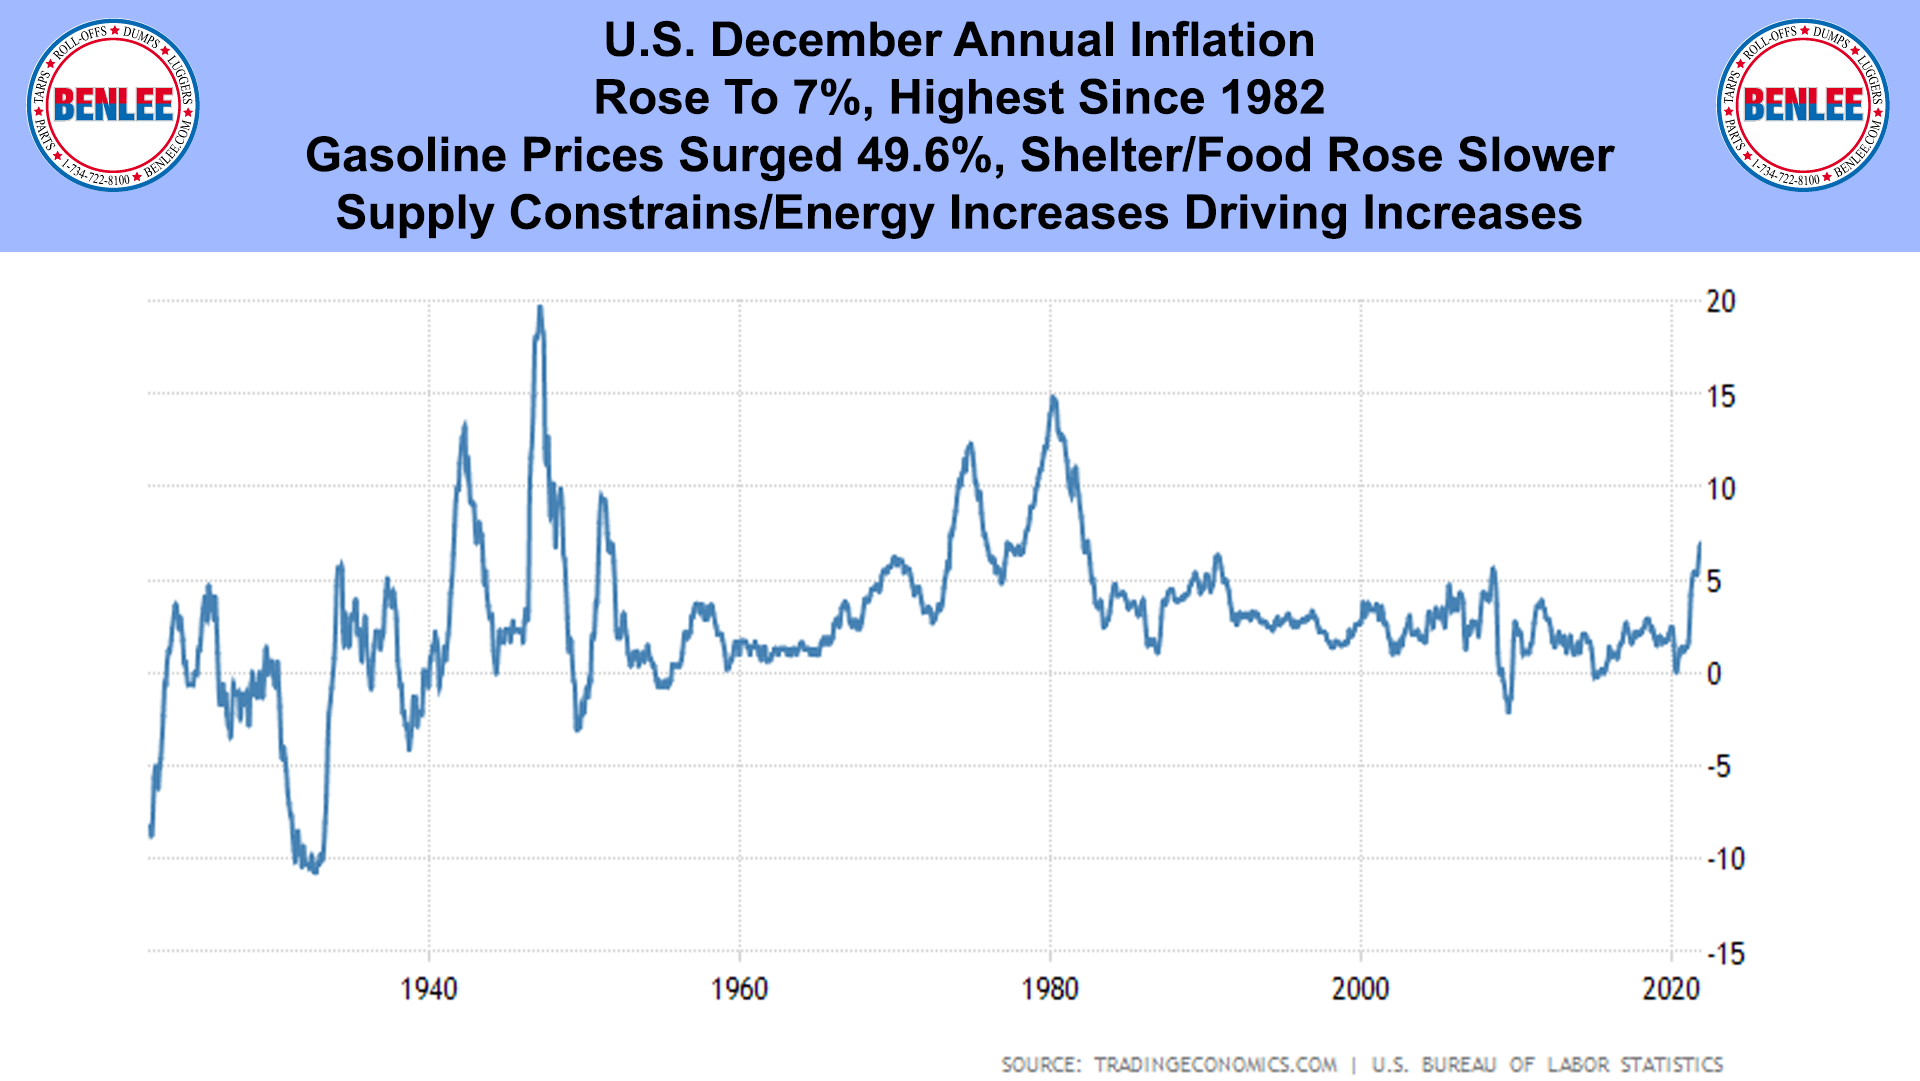 U.S. December Annual Inflation